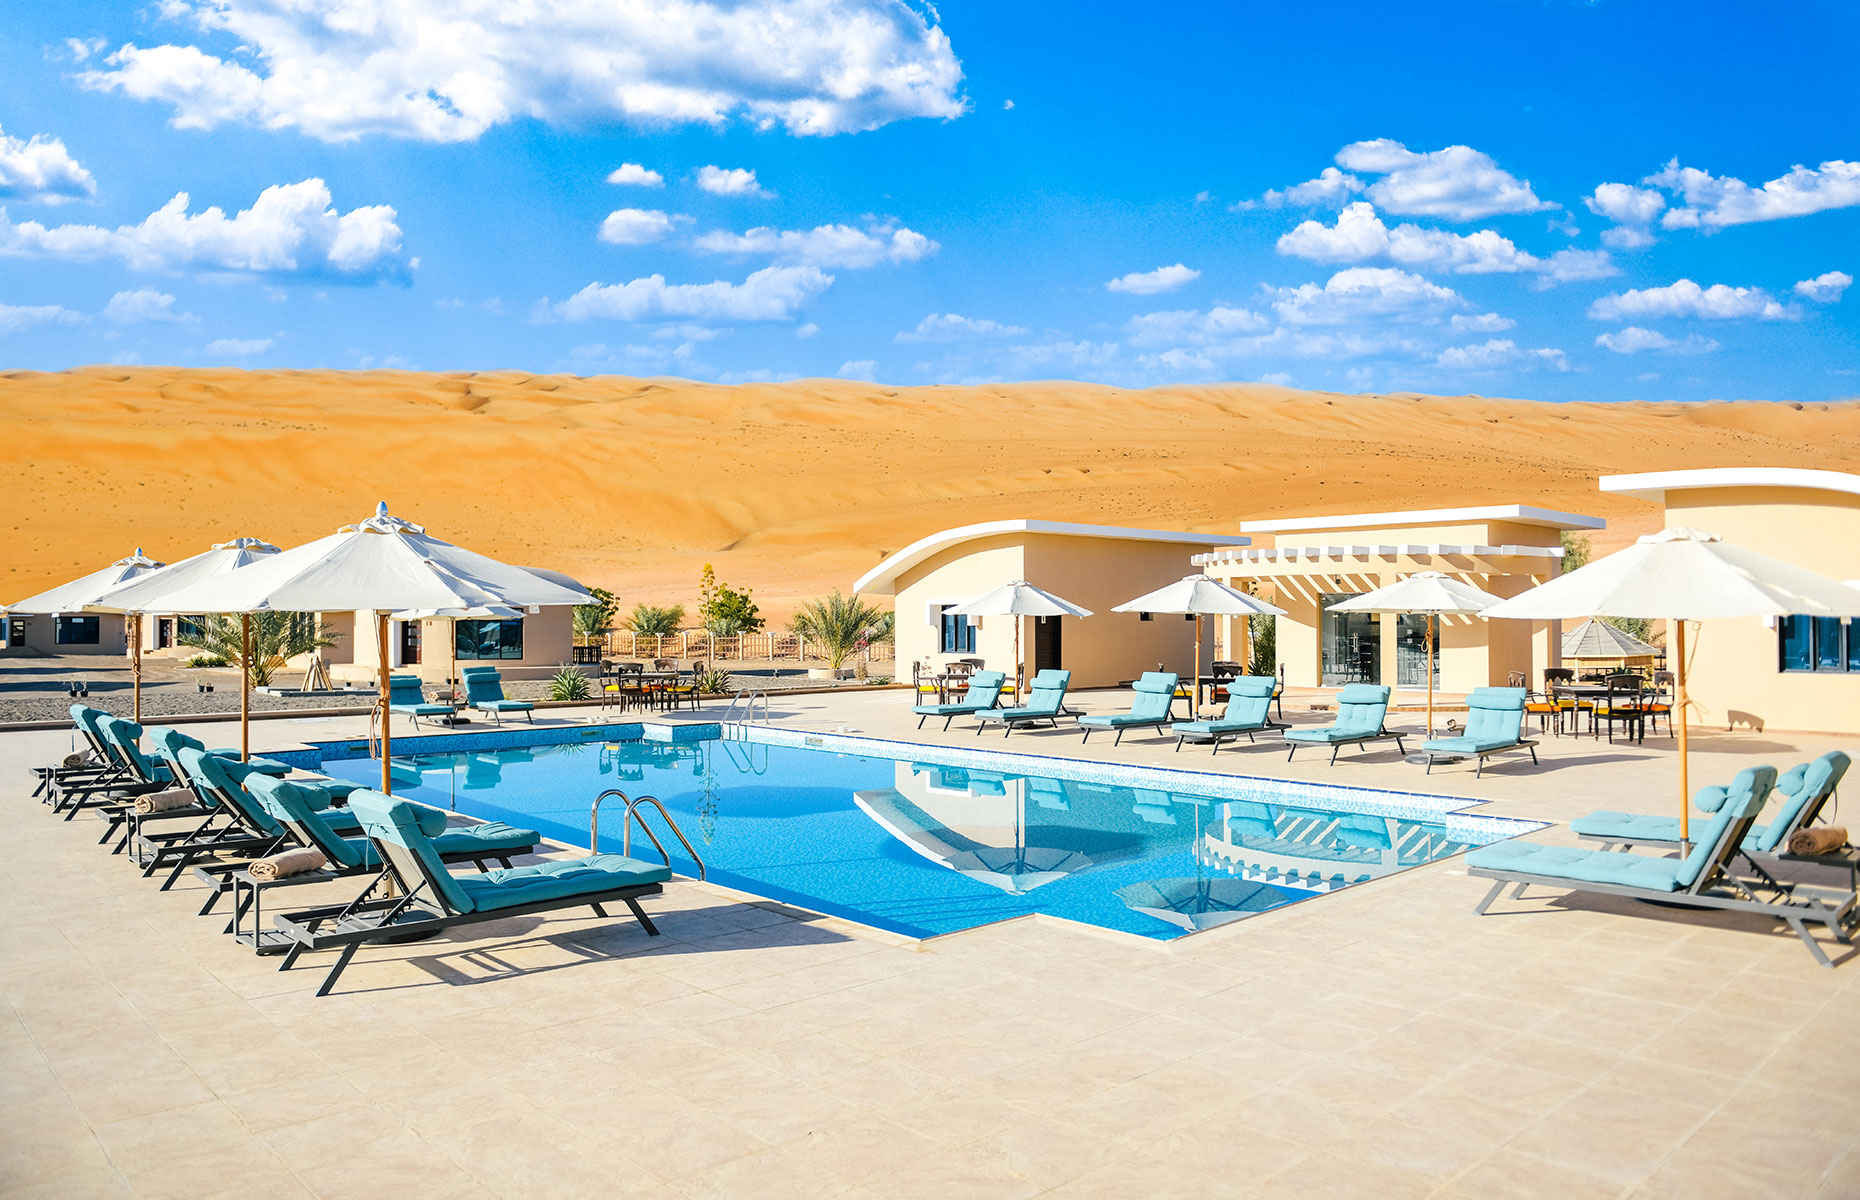 Arabian Nights Resort and Spa (Image: Visit Oman)